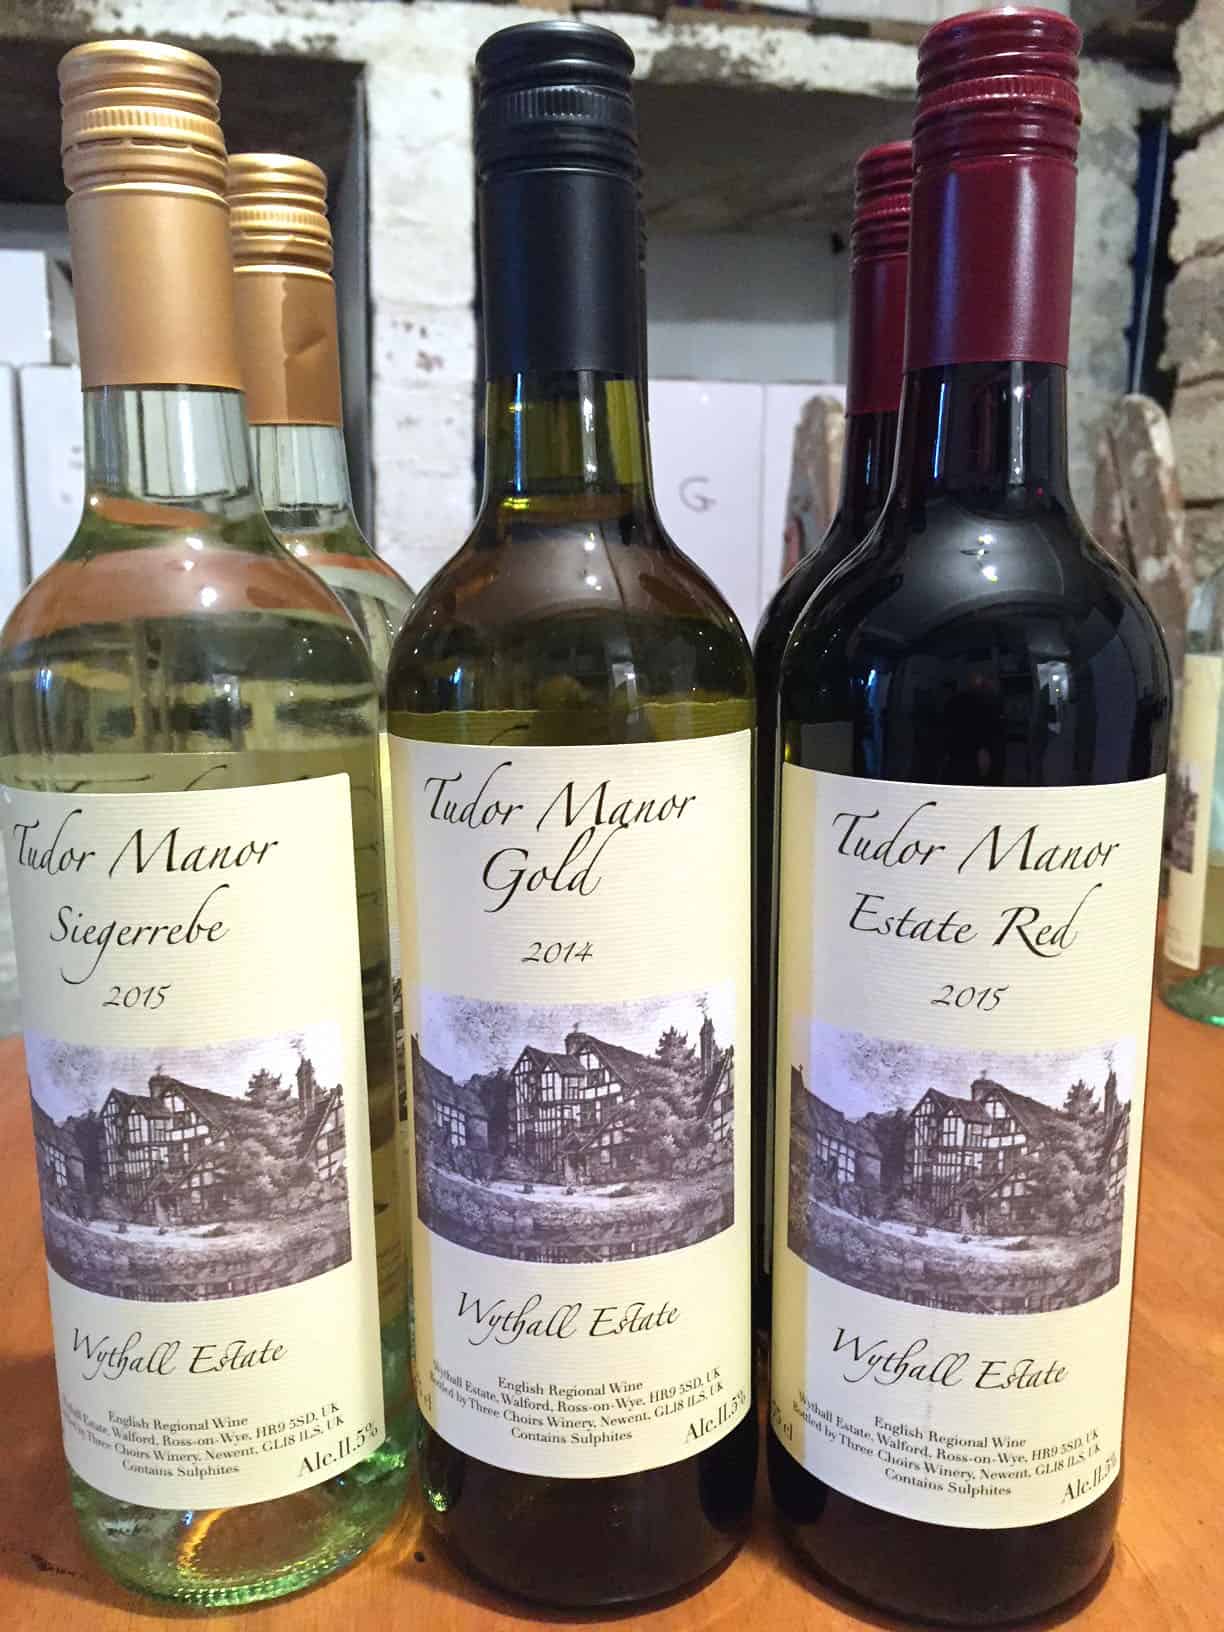 Tudor Manor wines from Wythall Vineyards, Ross-on-Wye England